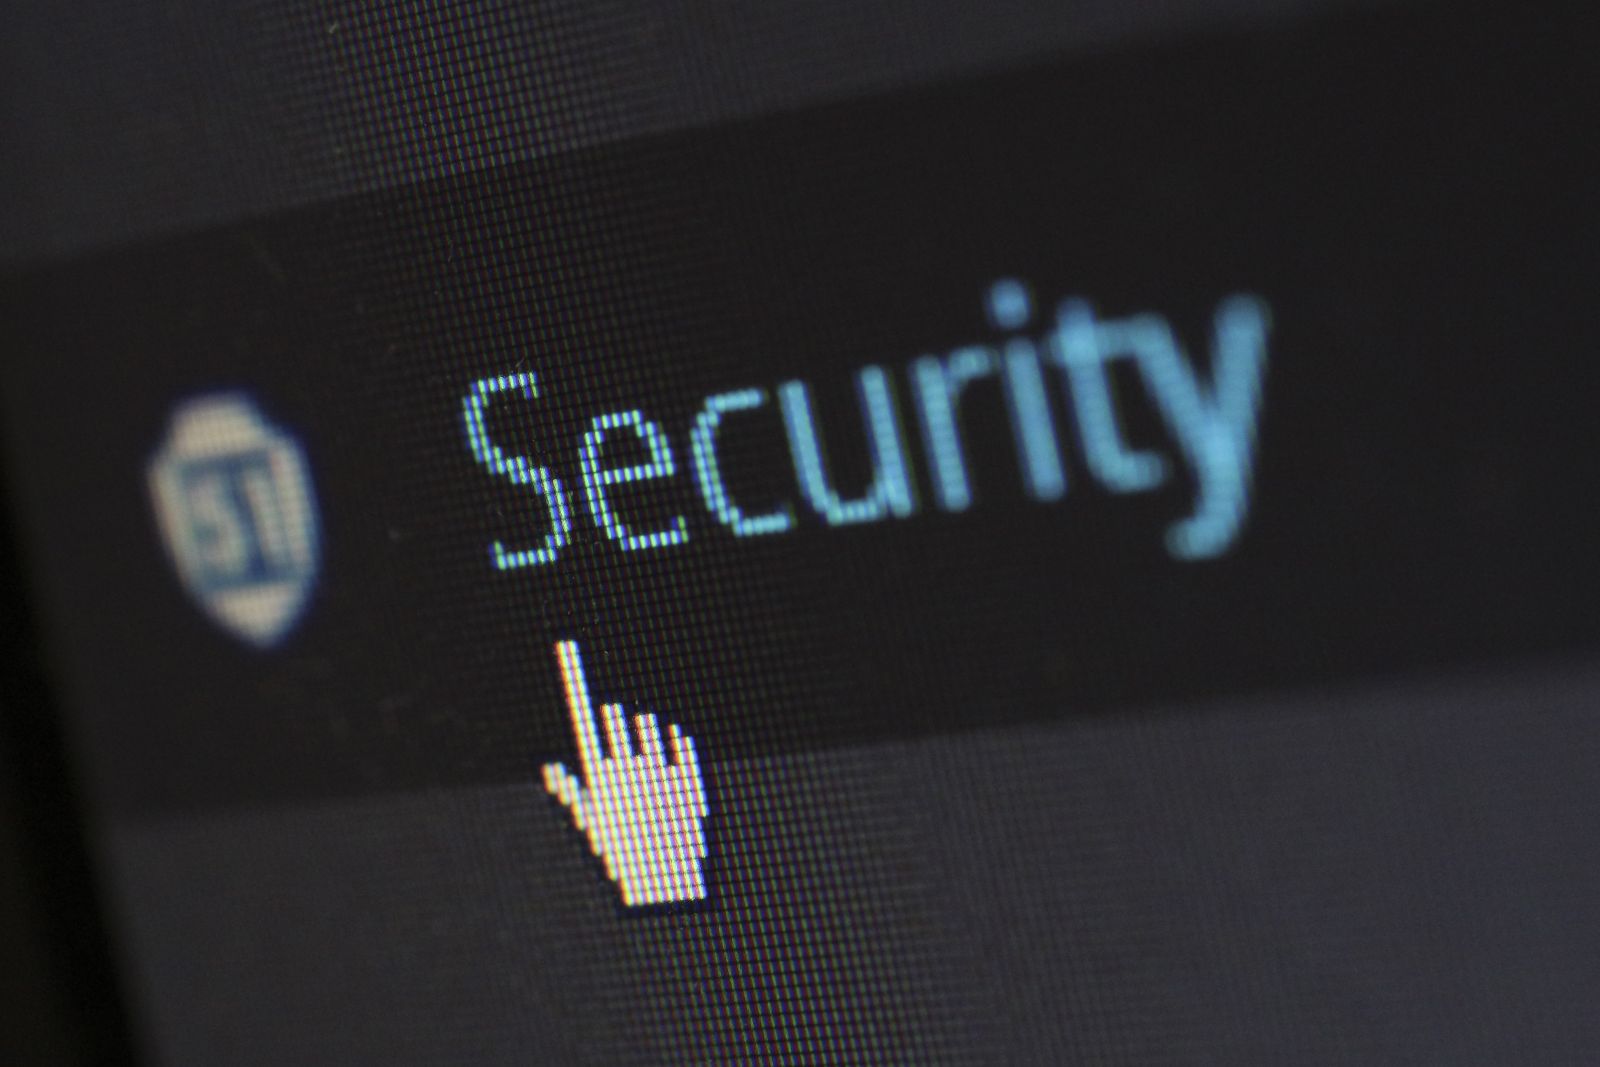 Mausklick auf "Security" Icon